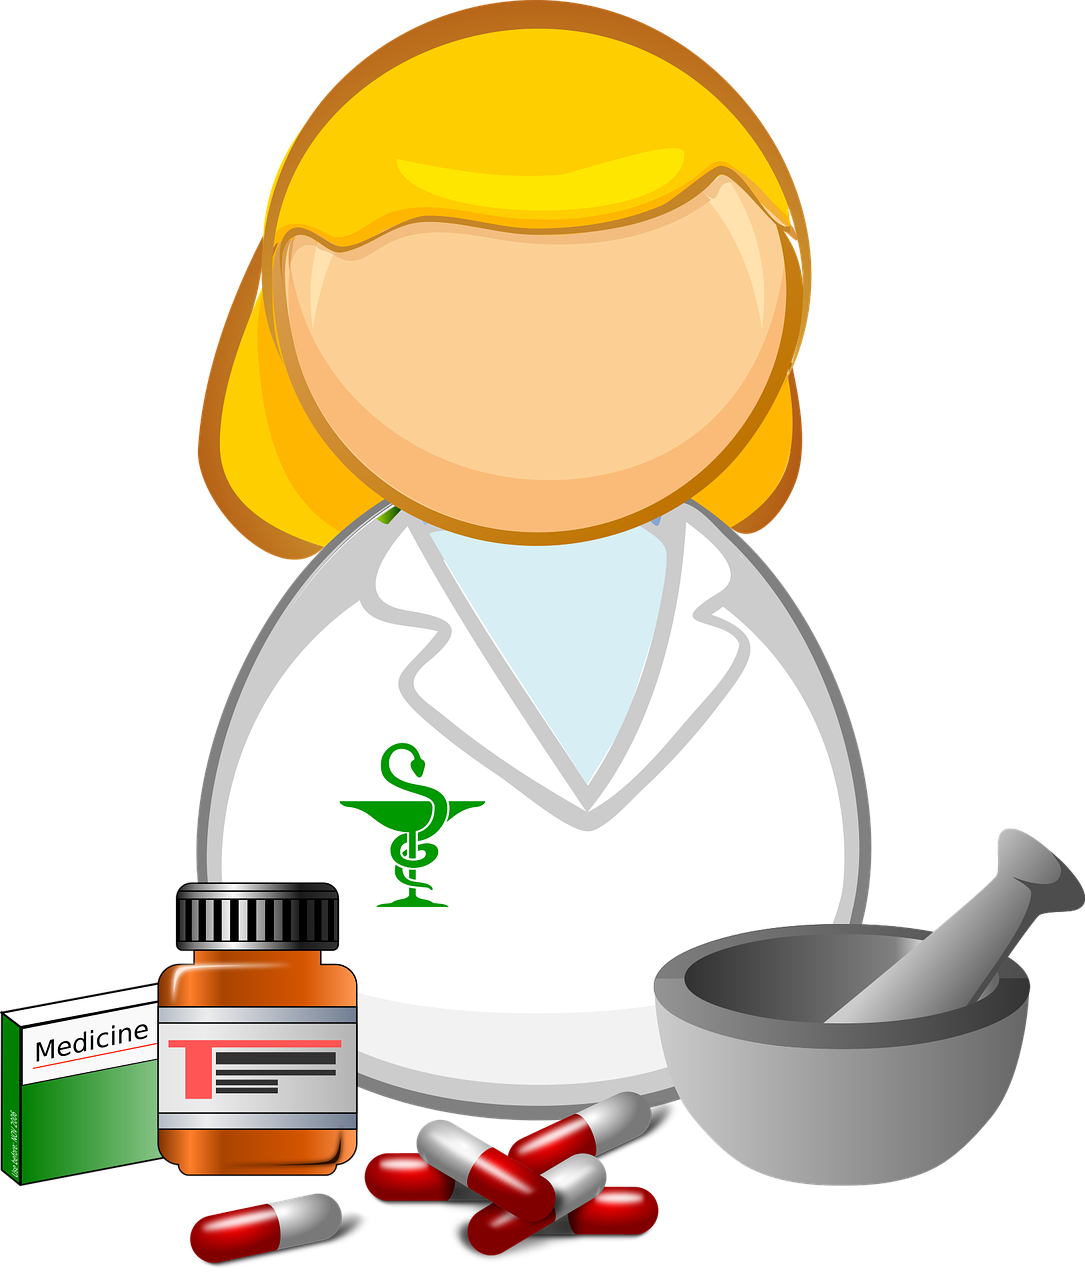 Pharmacy clipart otc drugs. Qualified clinicians teaching you